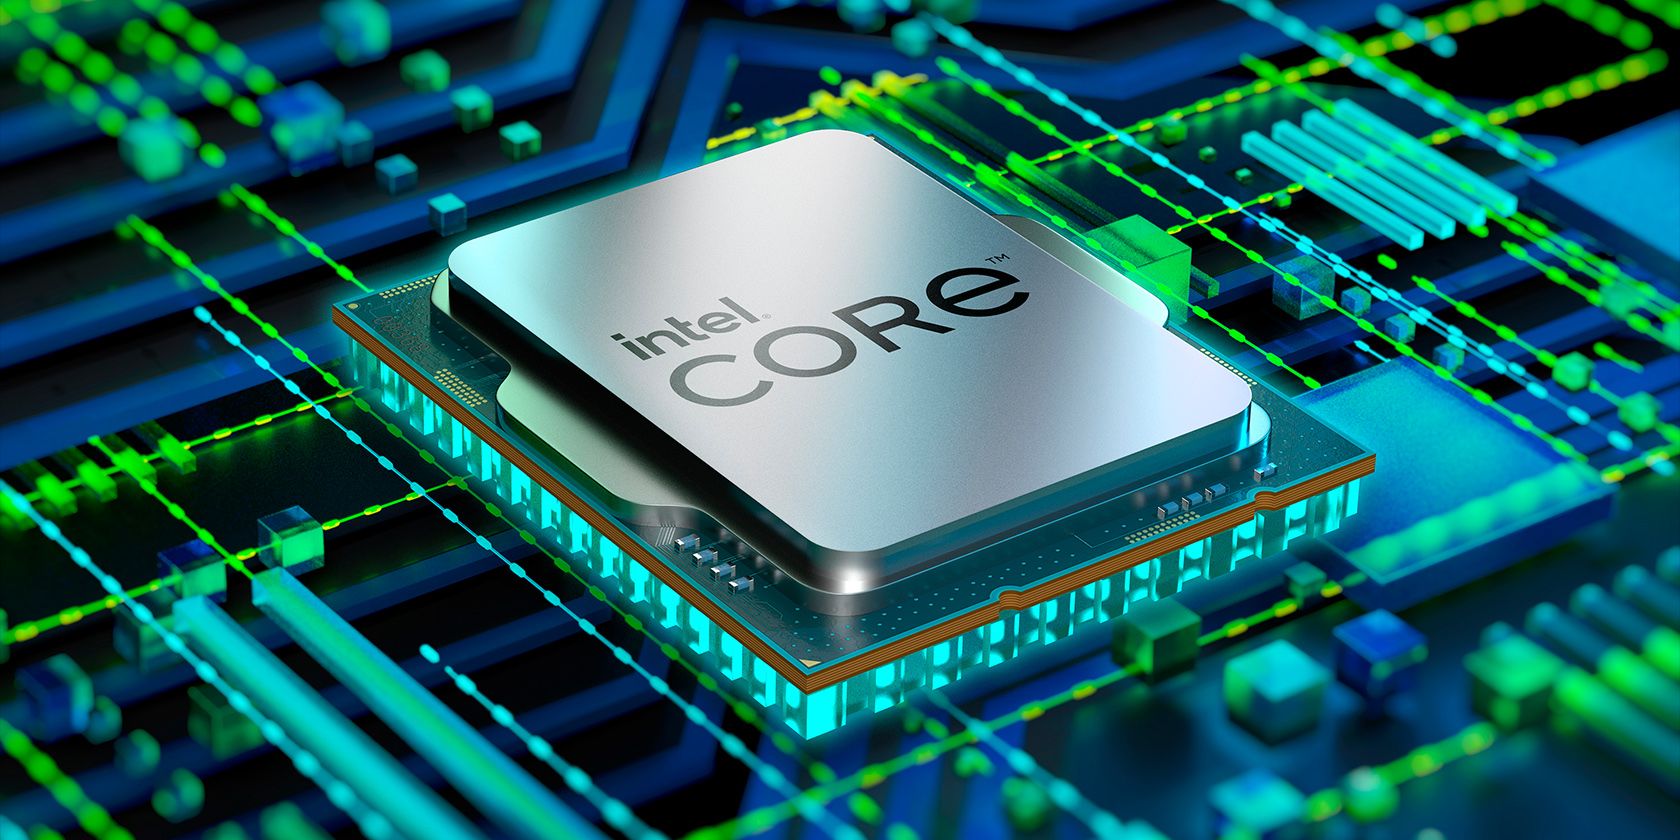 Graphics of a 12th generation Intel core processor